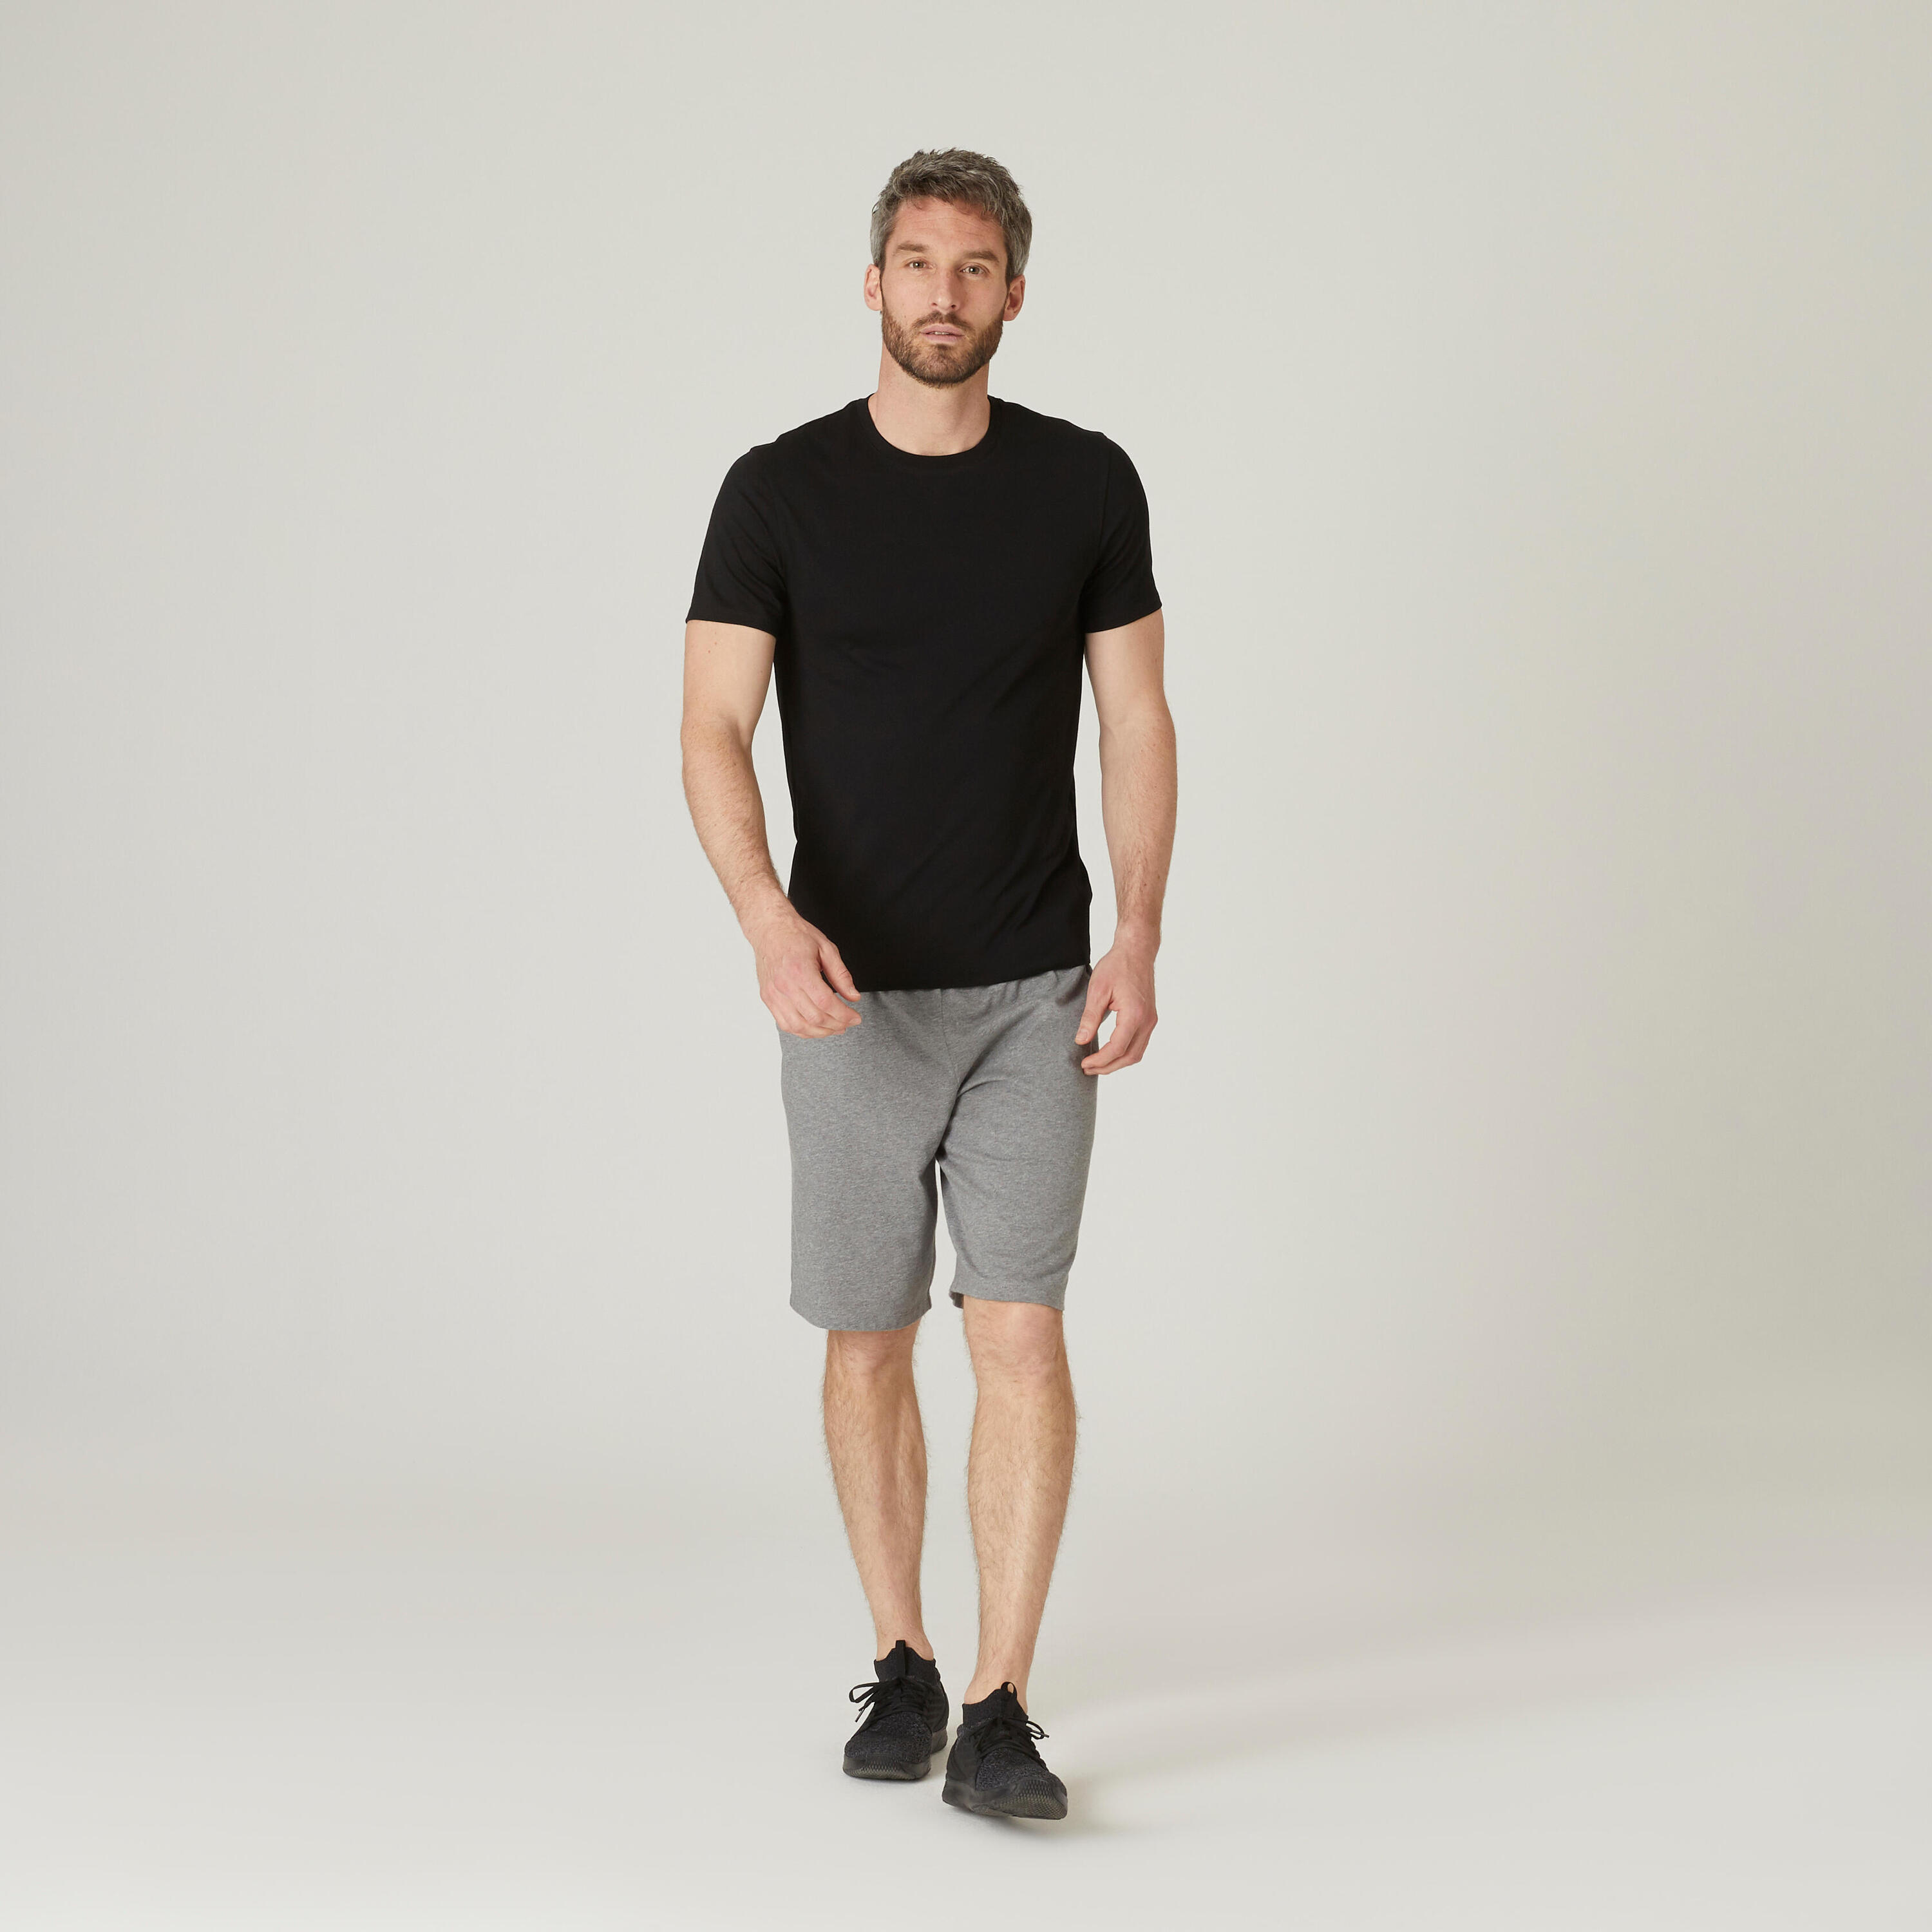 Men's Slim-Fit Fitness T-Shirt 500 - Black 7/19